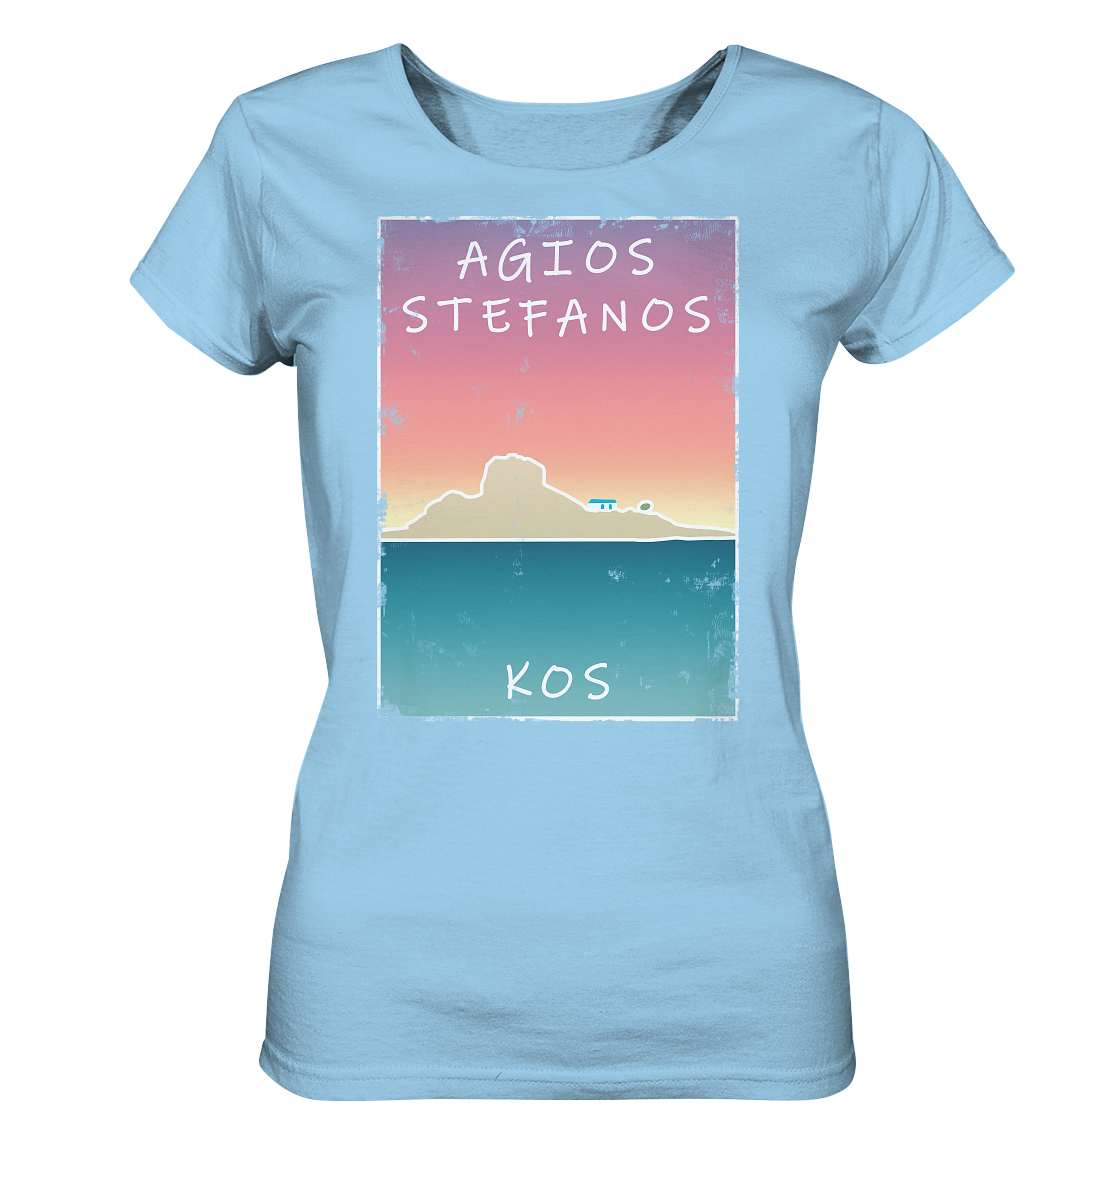 Agios Stefanos (Kastri) Kos - Ladies Organic Shirt